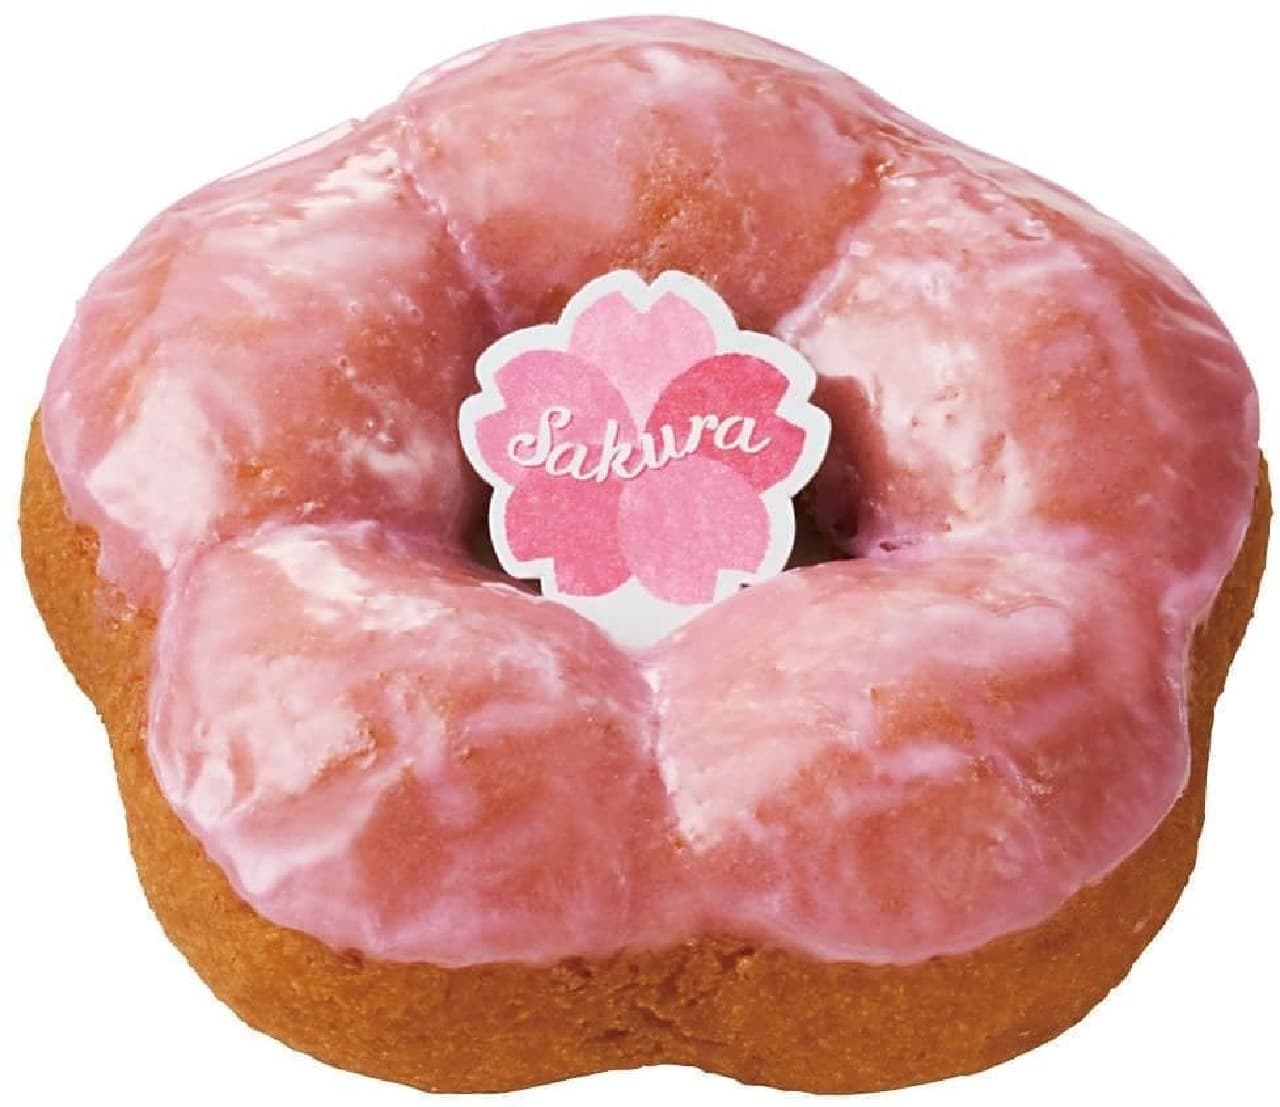 Mister Donut "Sakura Blooming Donut"